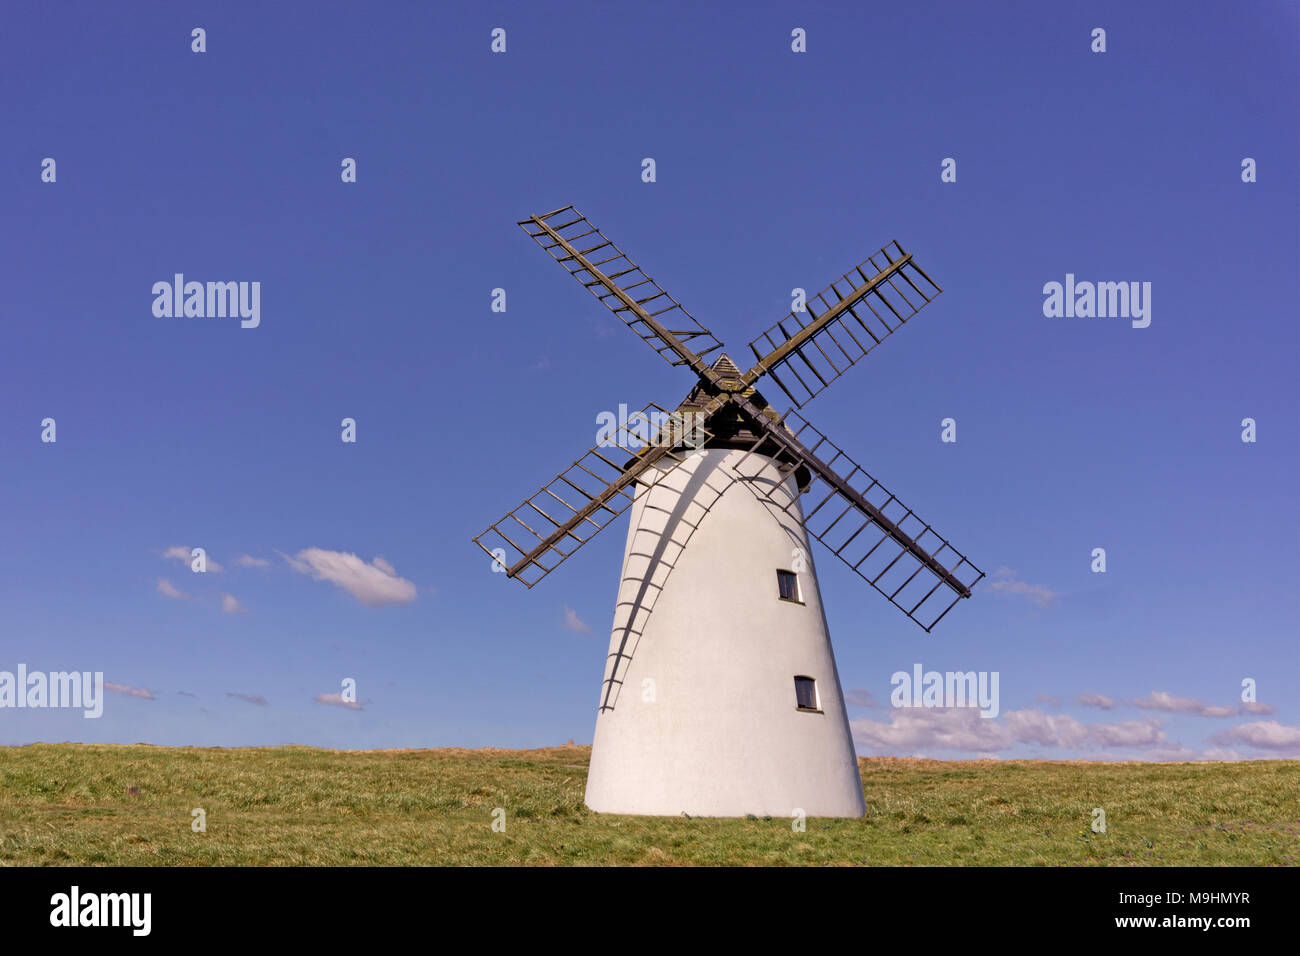 The windmill at Marton, Blackpool, Lancashire, England, UK. Stock Photo